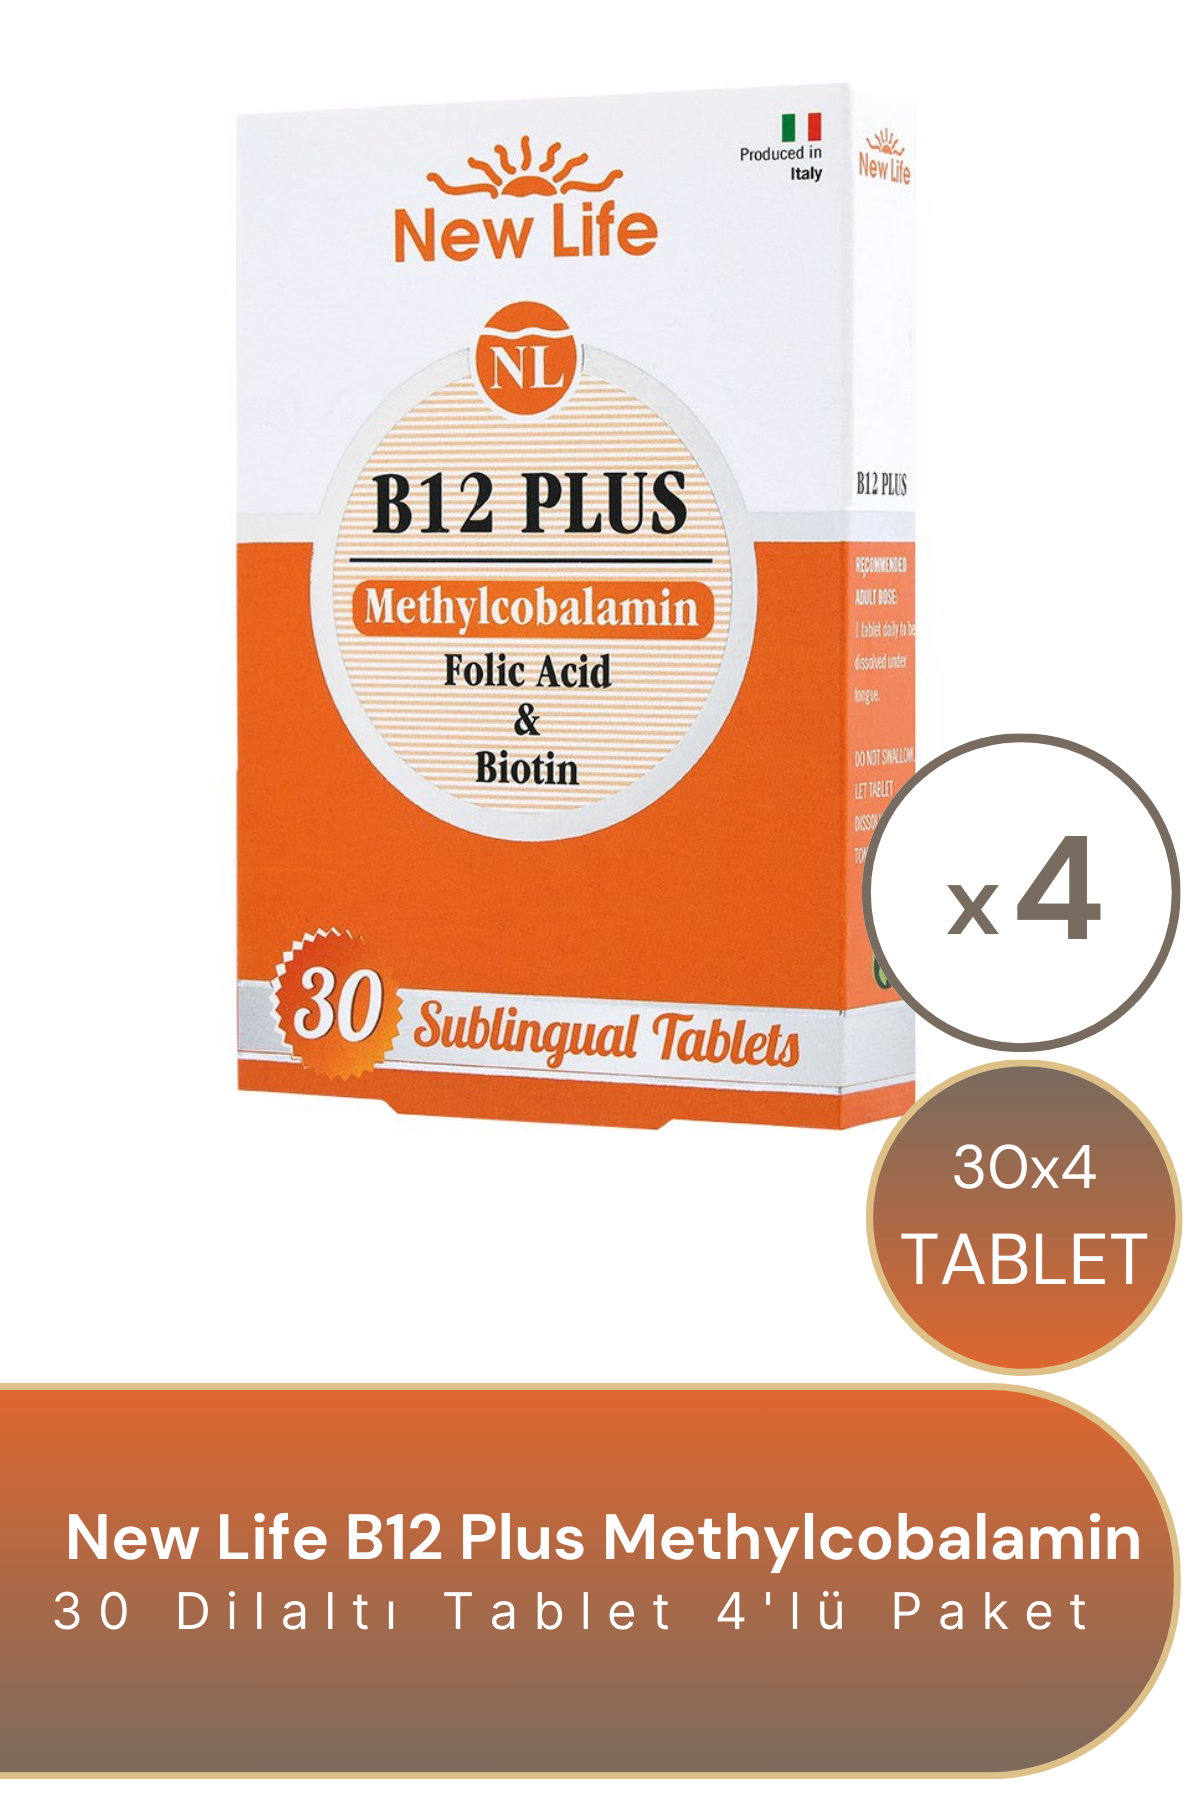 New Life Metilkobalamin B12 Plus 1000 mcg 30 Dilaltı Tablet 4'lü Paket